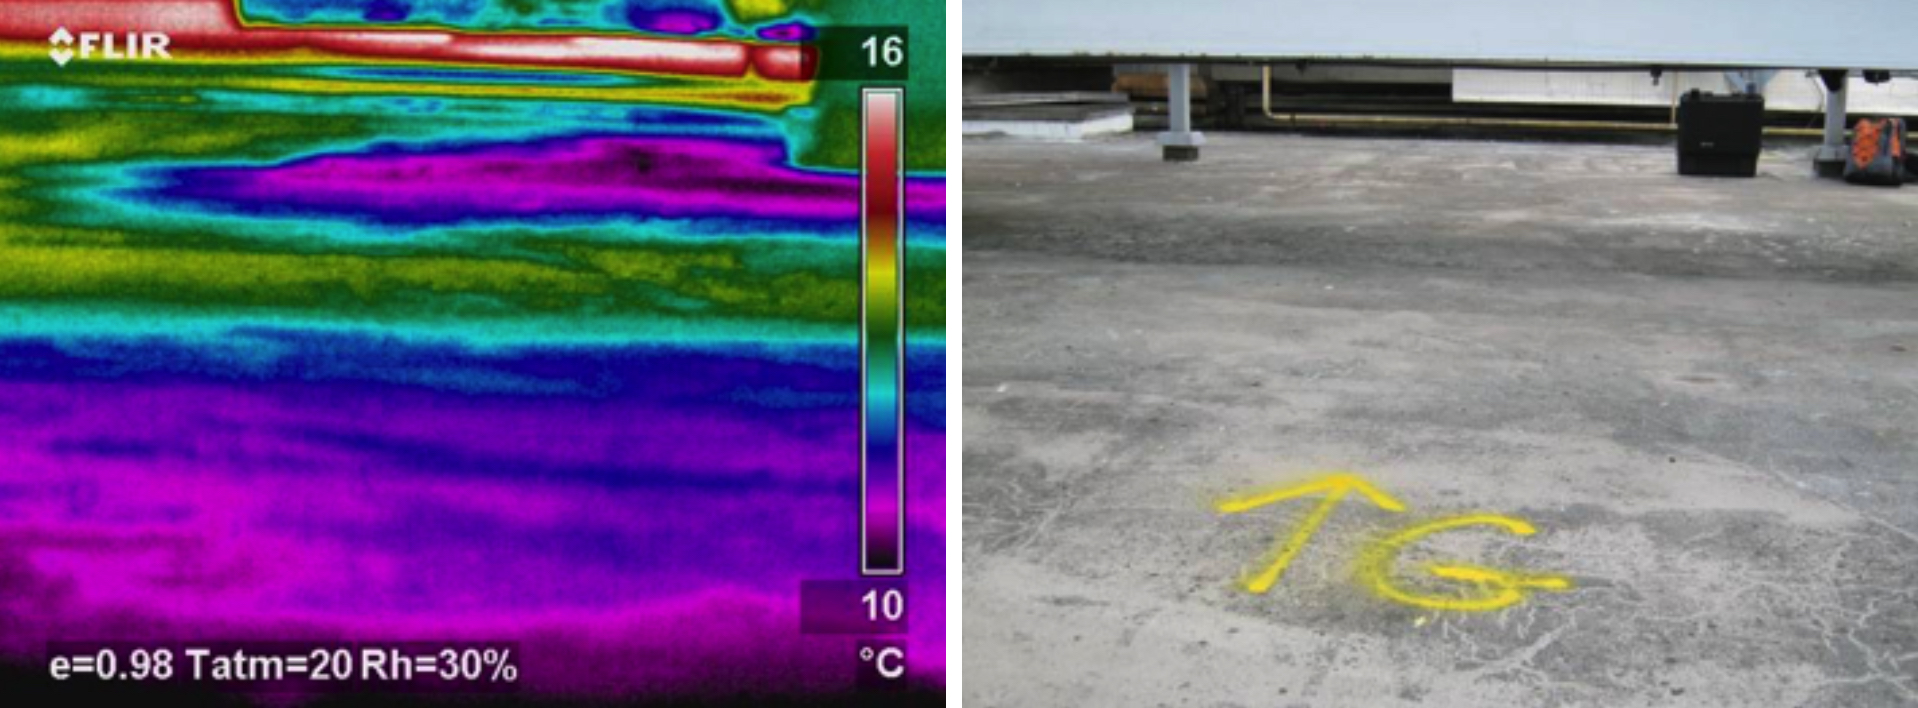 Leak Detection: Thermal Imaging for Hidden Water Leaks